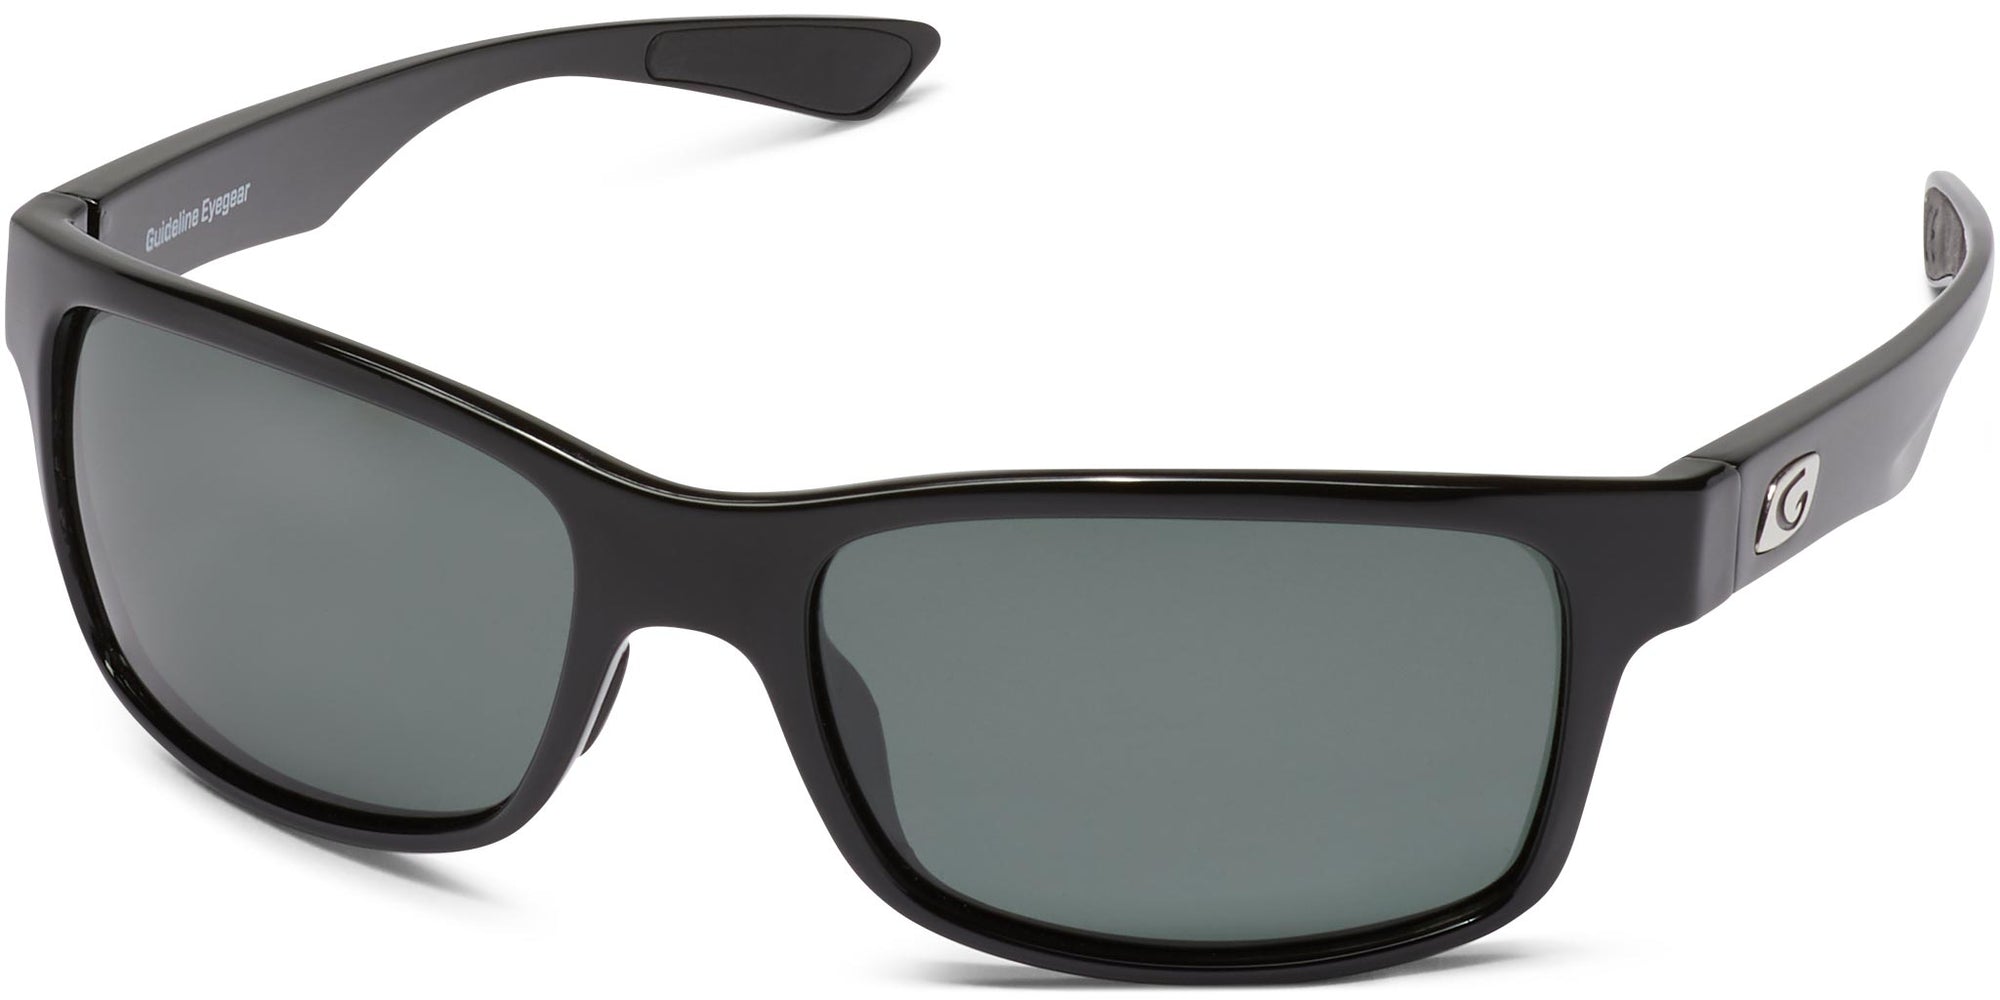 Skiff - Shiny Black/Gray Lens - Polarized Sunglasses